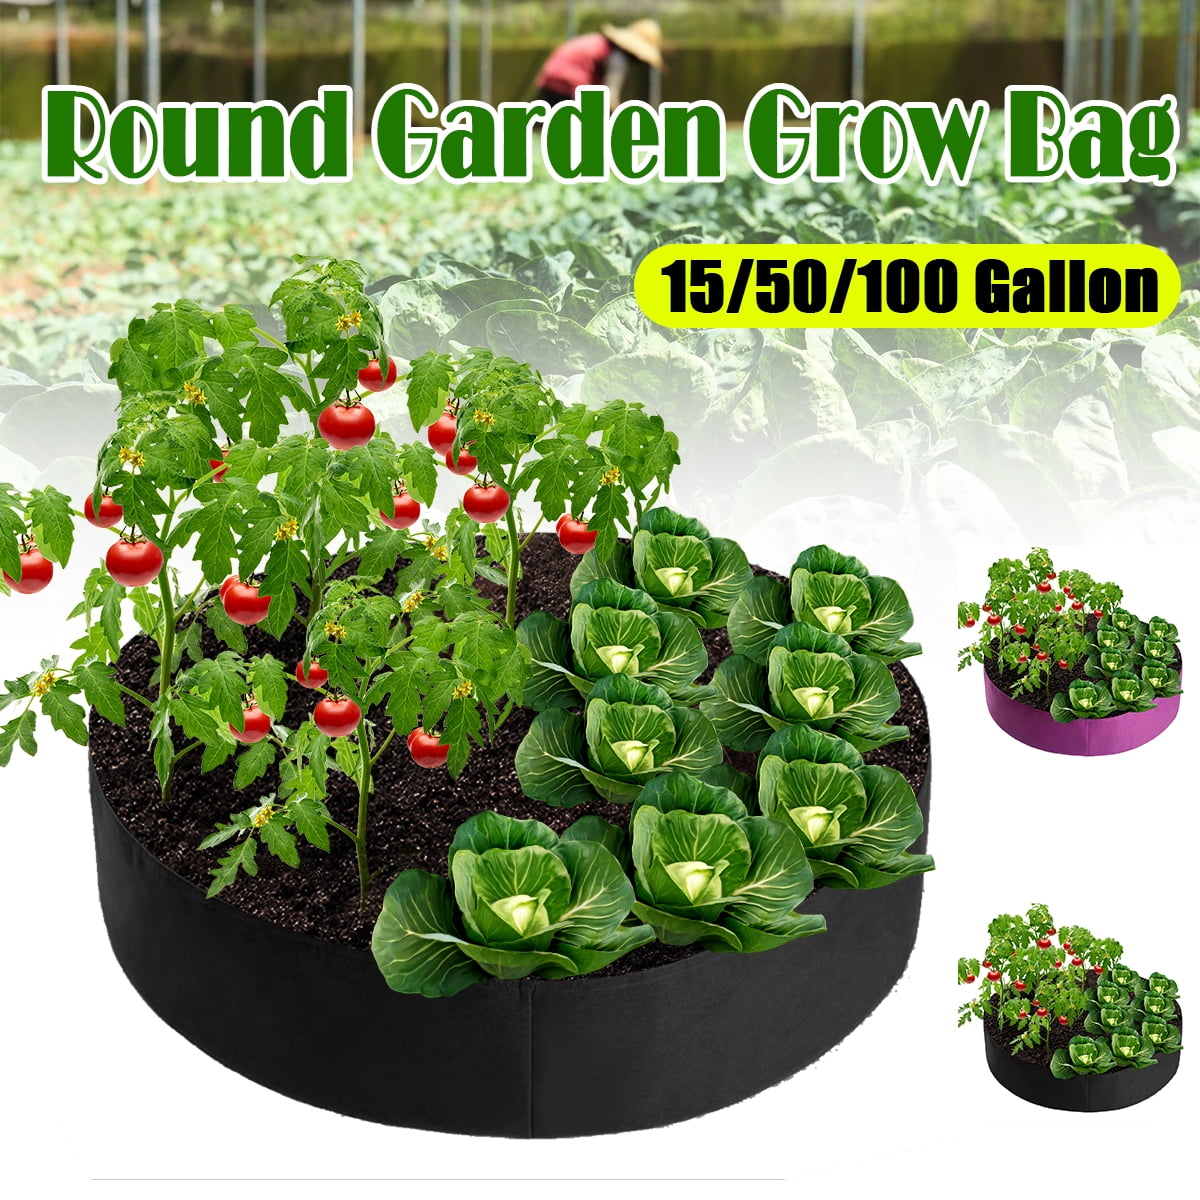 Black Raised Garden Bed Fabric Raised Planting Bed Round Garden Grow Bag for Herb Flower Vegetable Plants M 